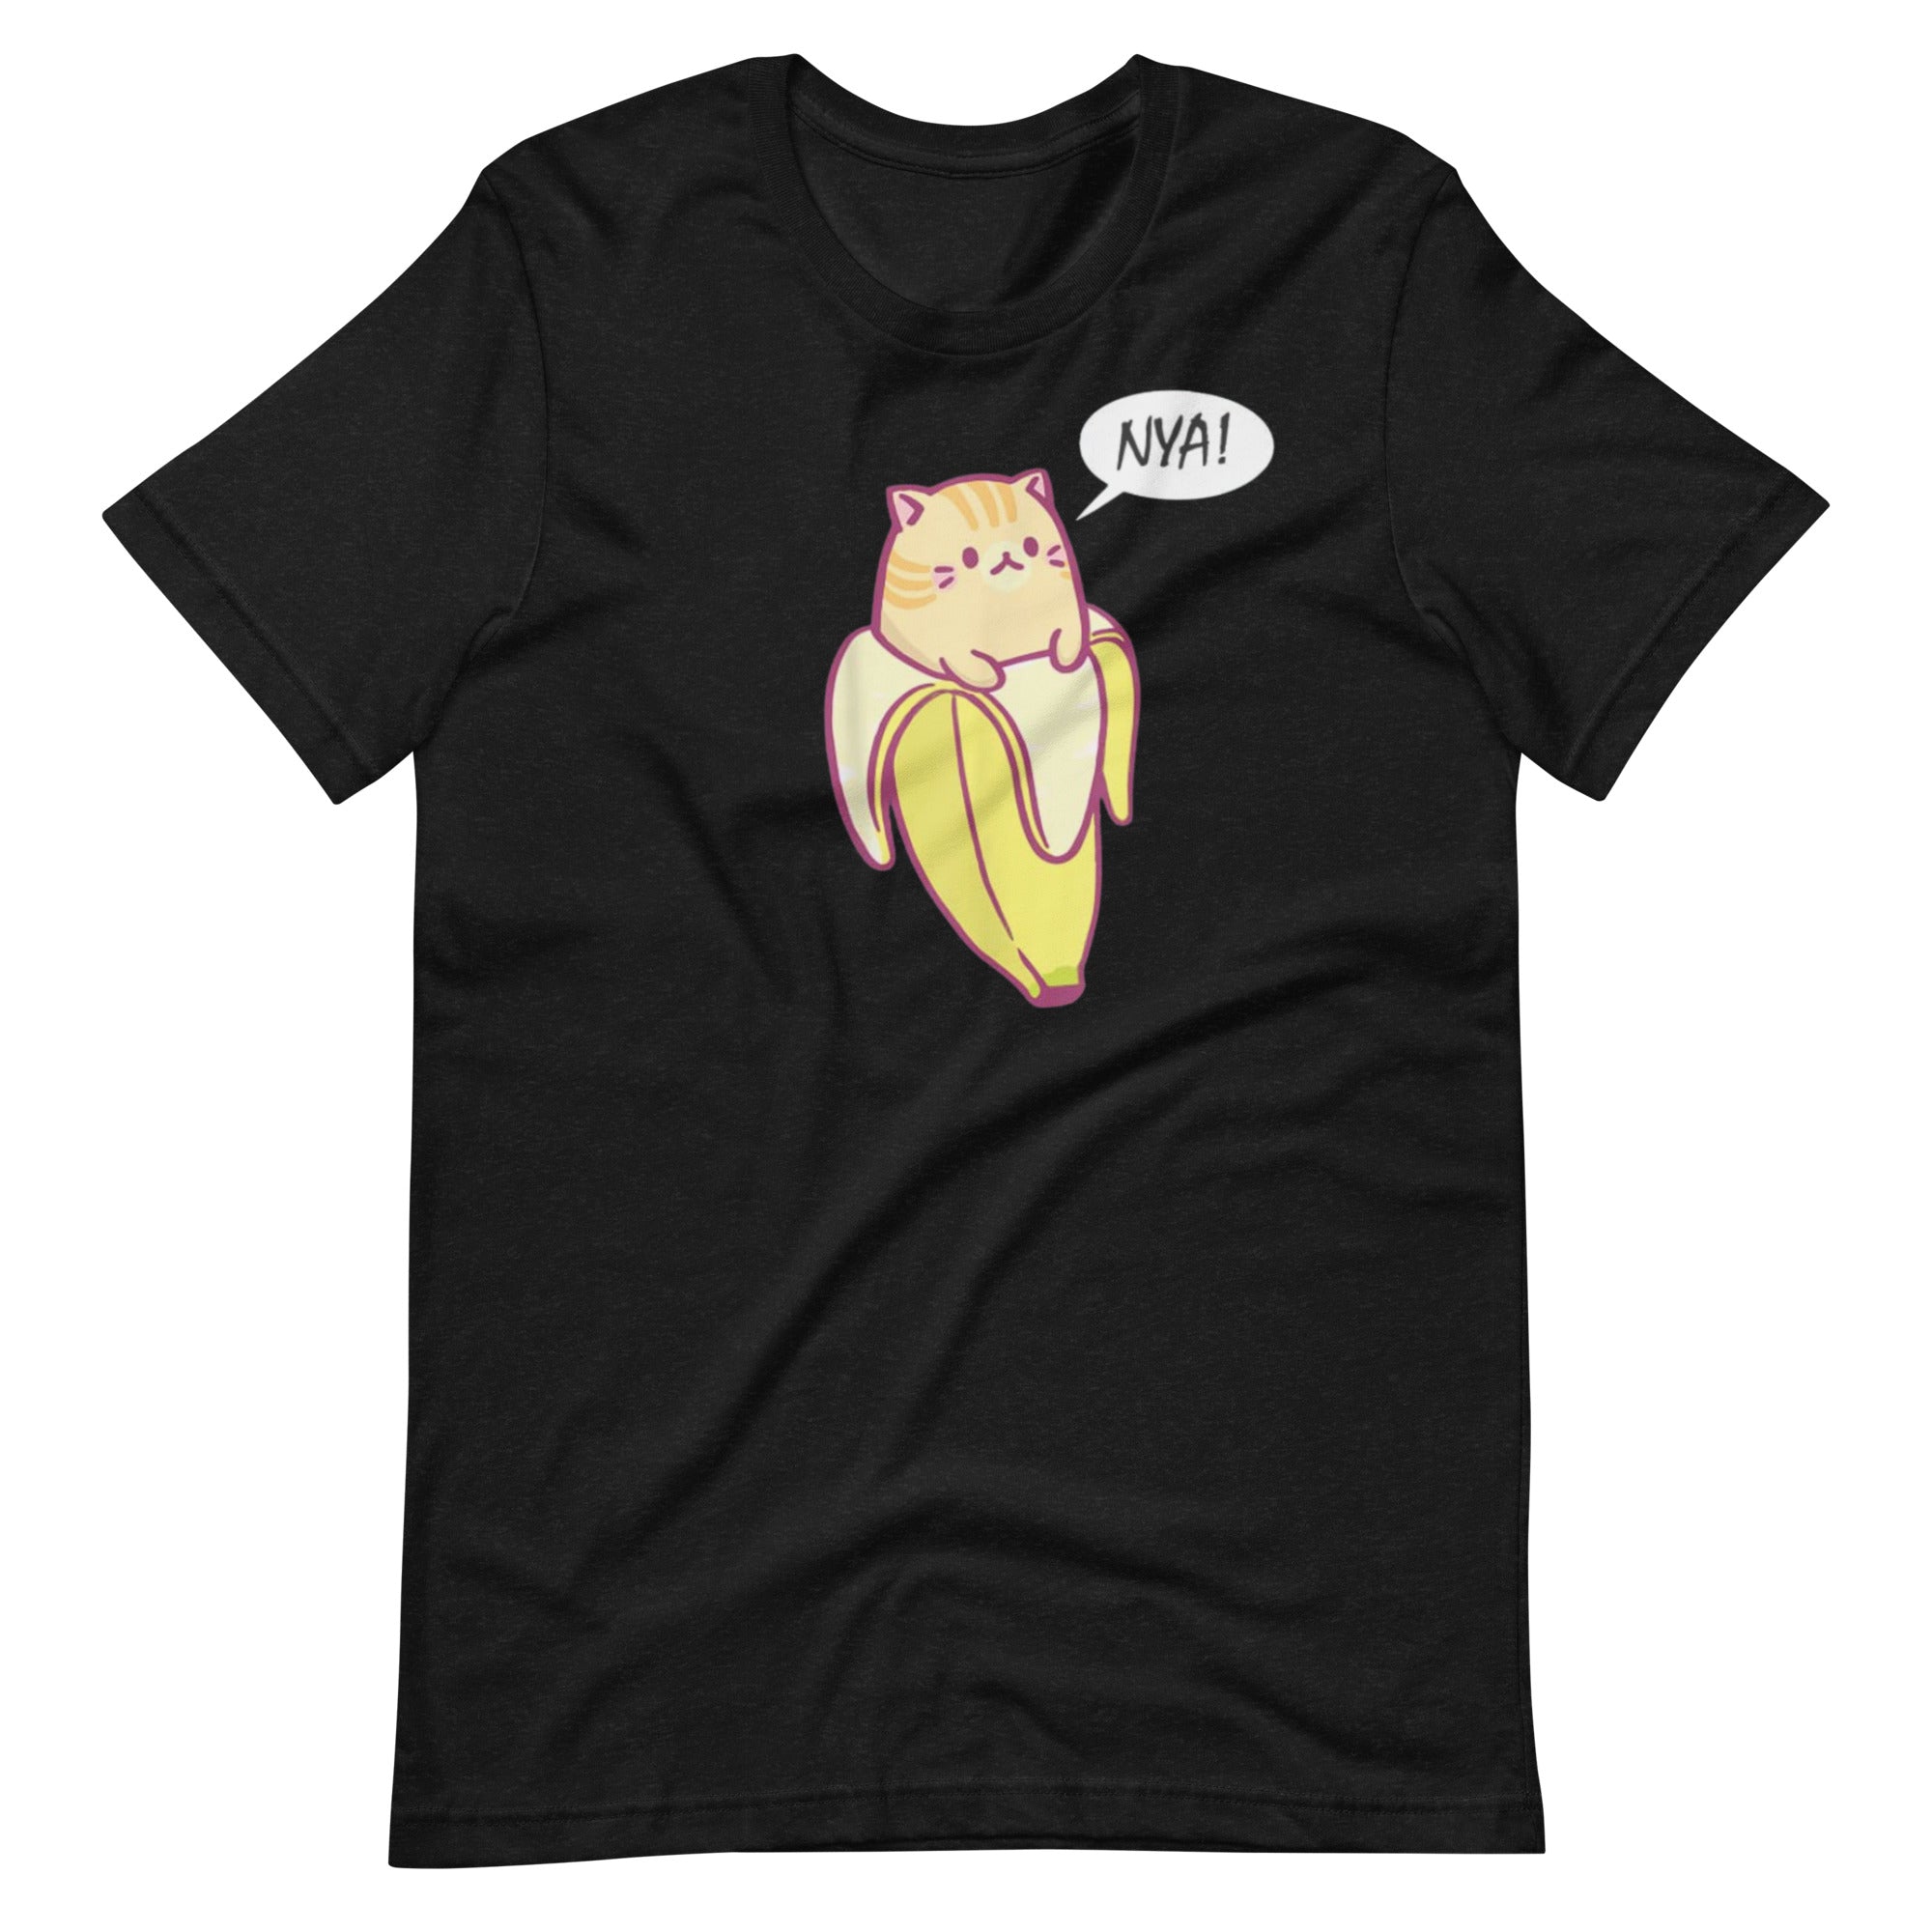 Banana cat shirt